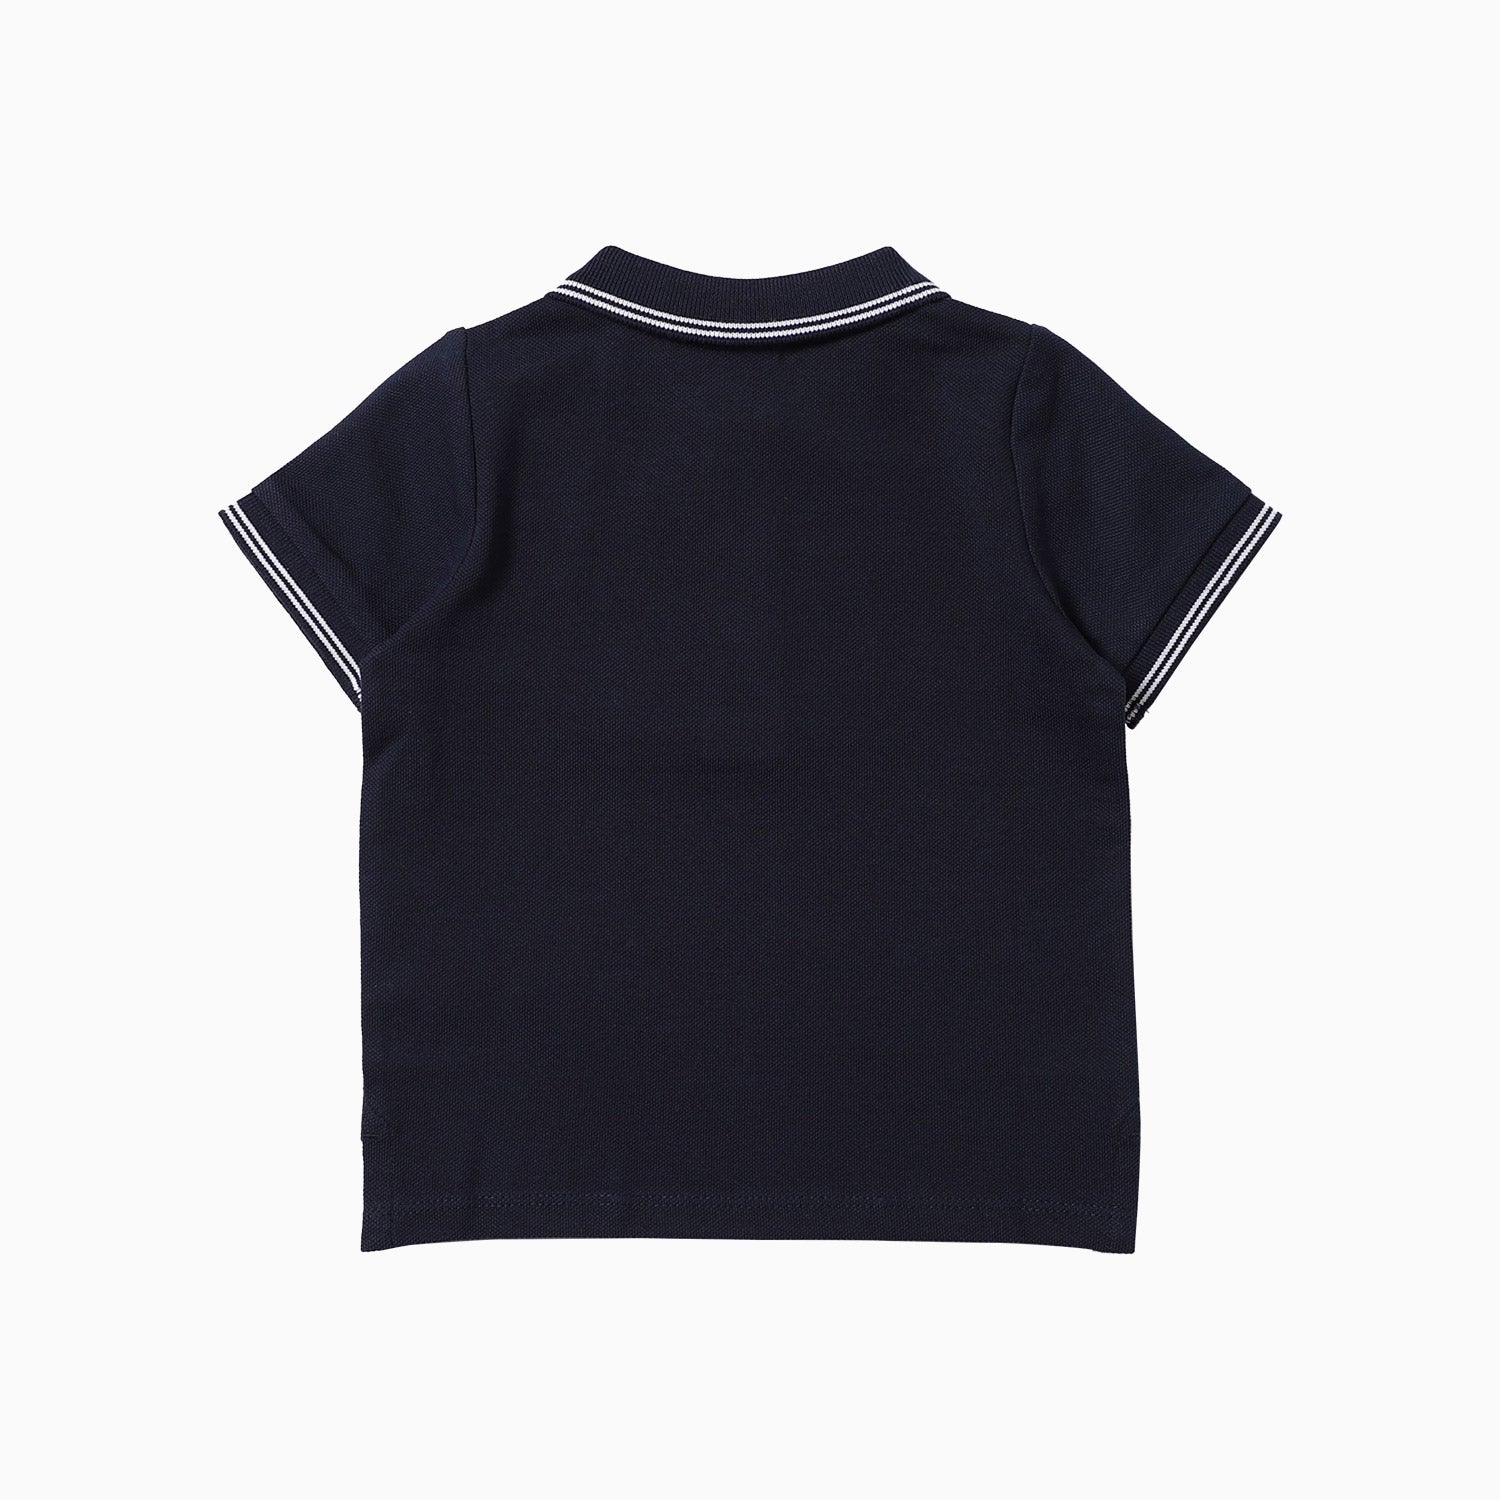 Hugo Boss Kid's Short Sleeve Polo T Shirt - Color: Navy - Kids Premium Clothing -